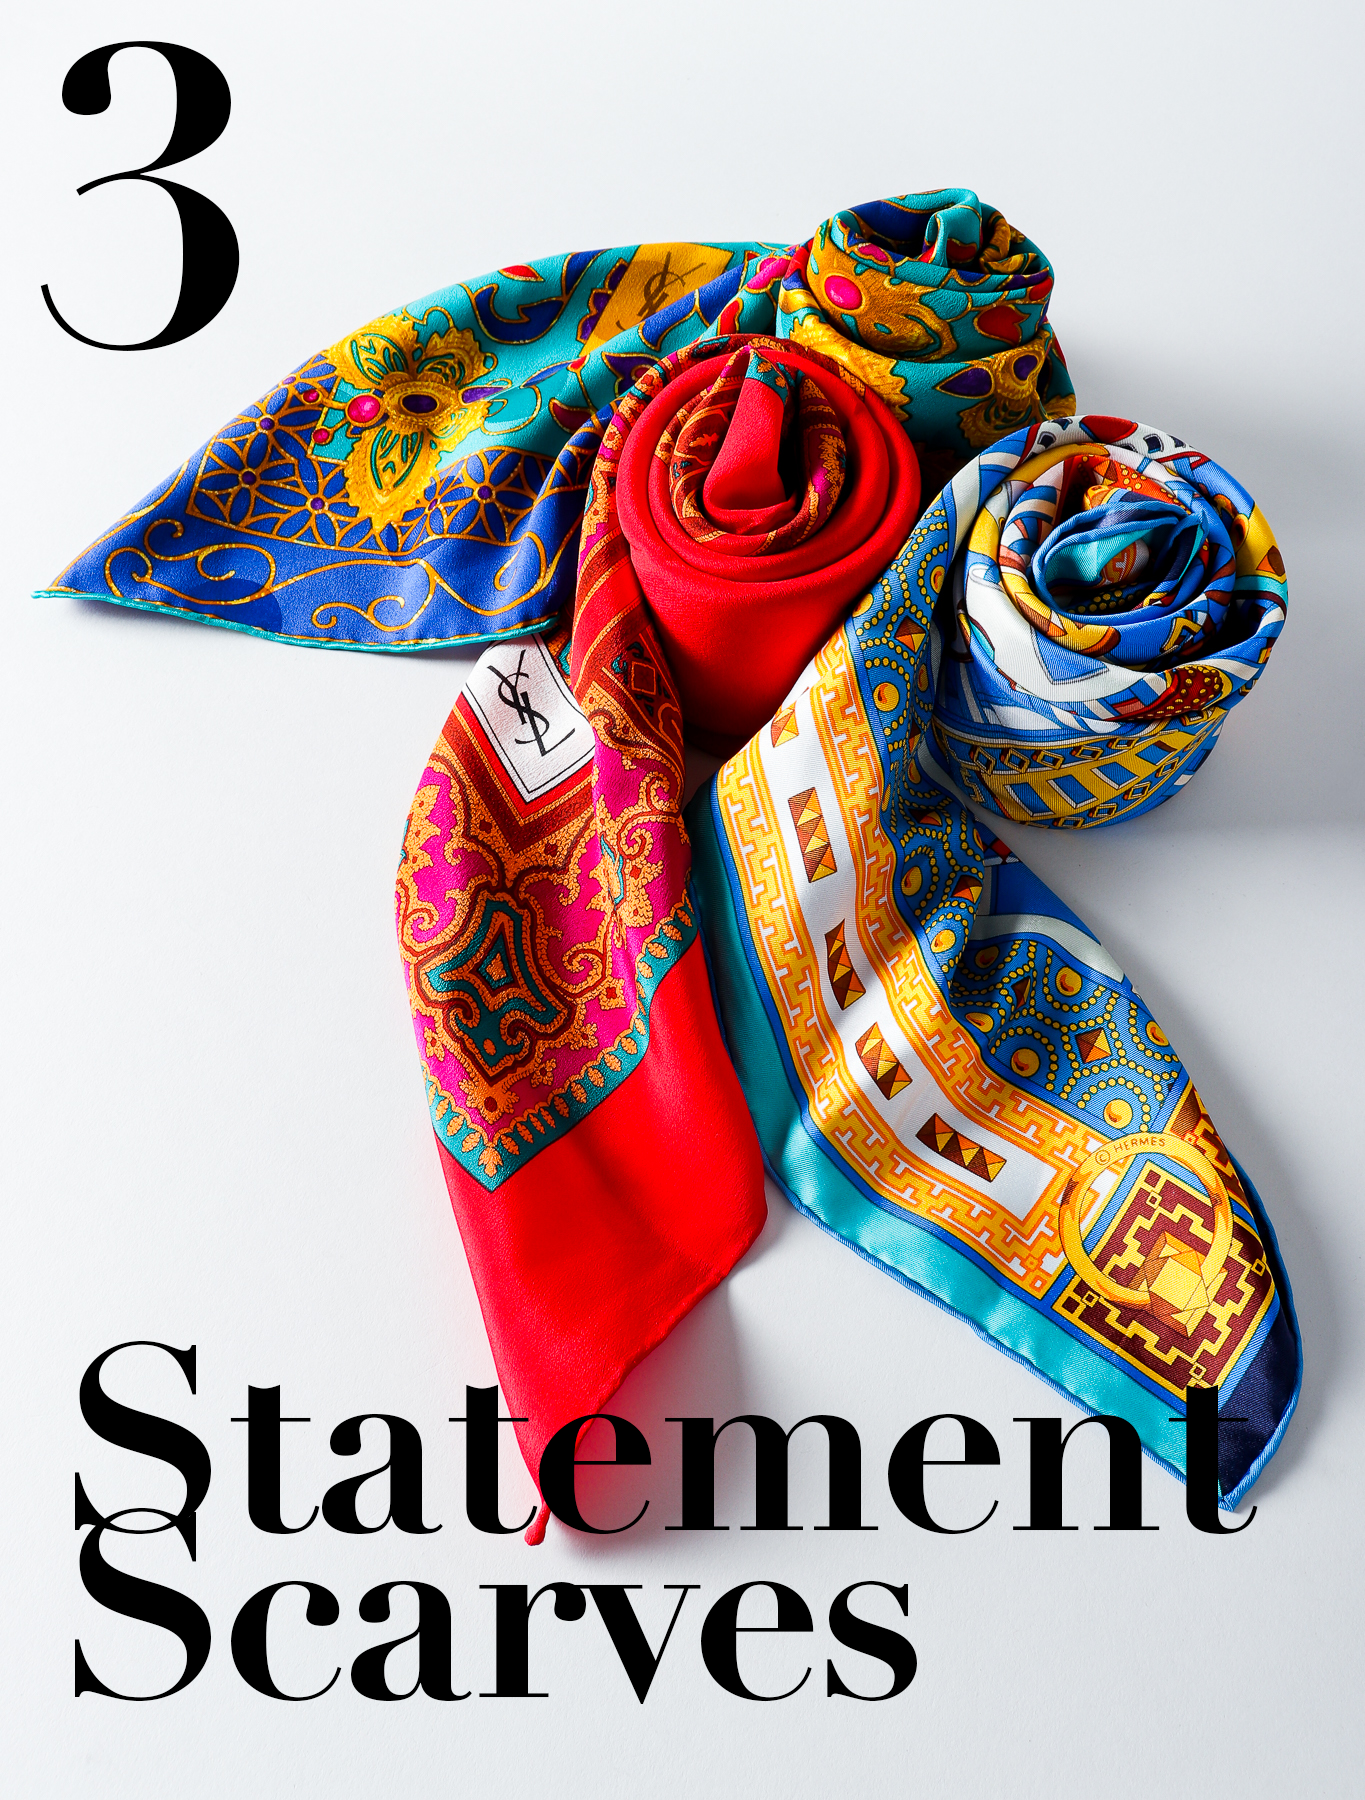 Recess Dresscode No-Regifting Guide 2019 #3-Statement Scarves: 3 scarves in rosettes